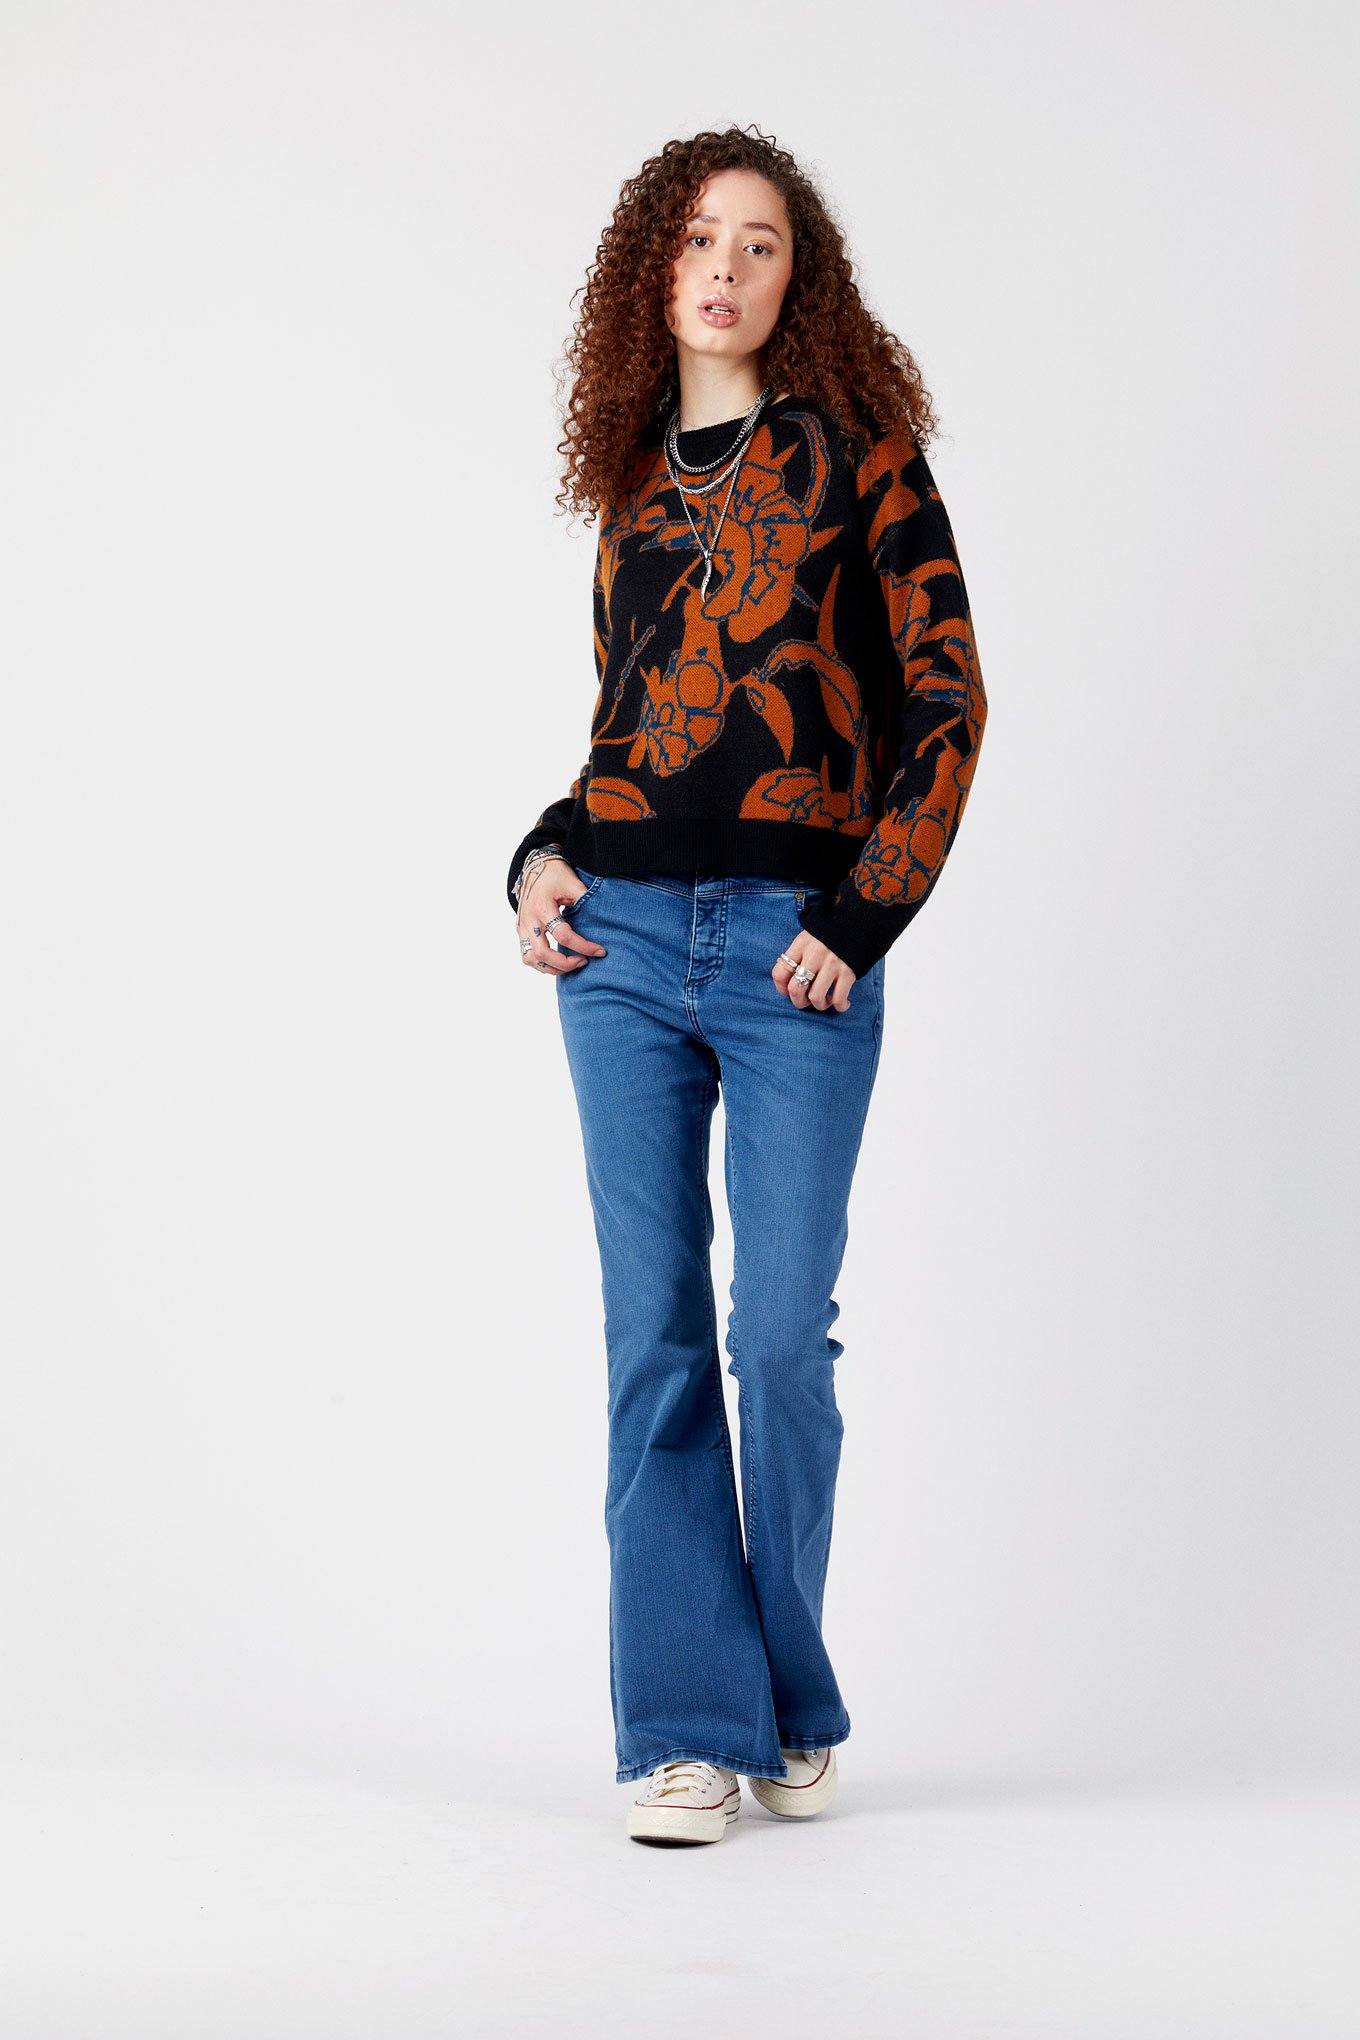 MAVIS Azure - GOTS Organic Cotton Jeans by Flax & Loom, 28 / Regular